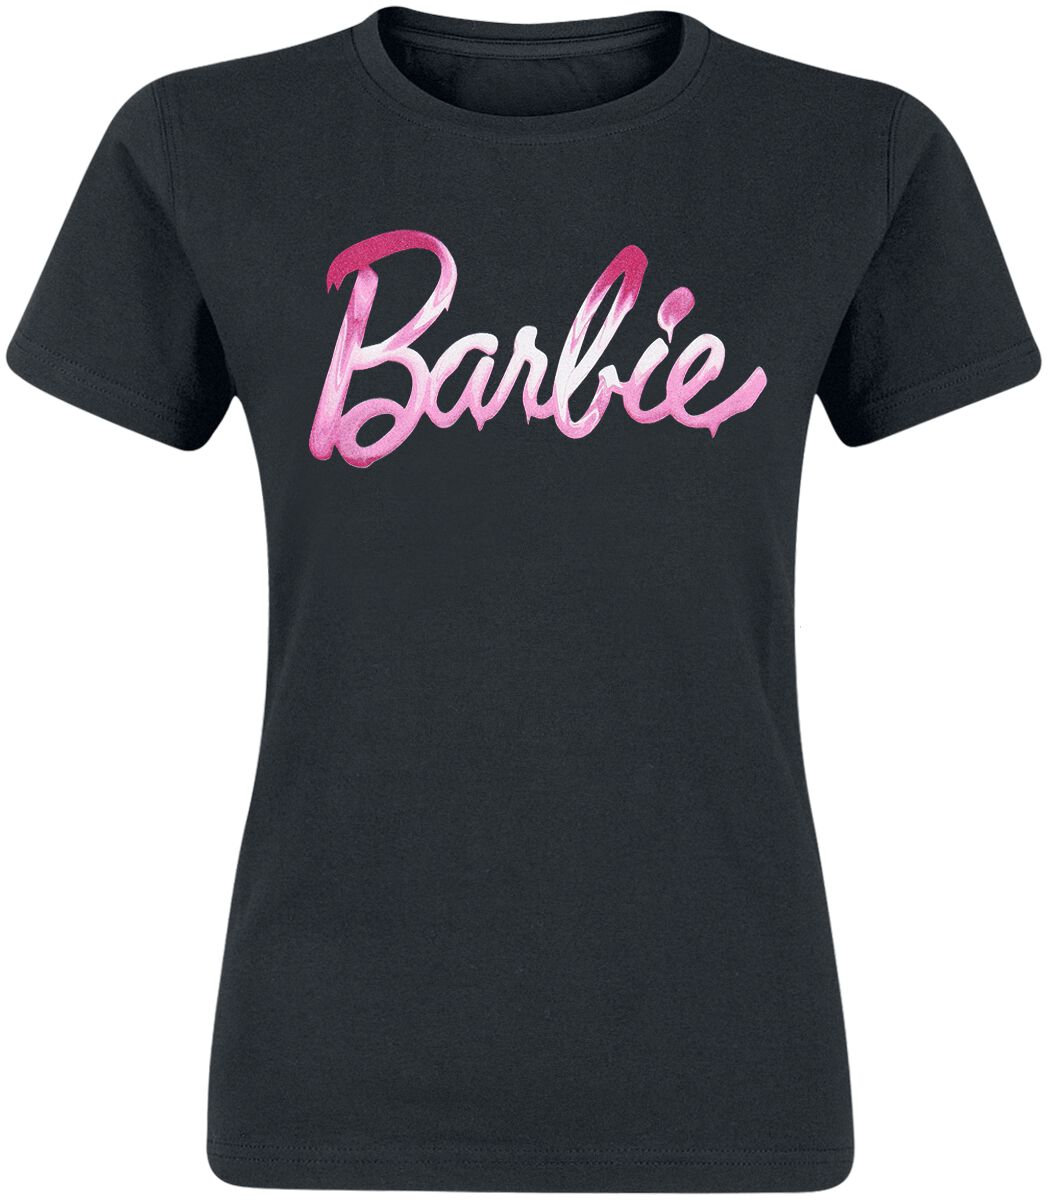 Barbie Melted T-Shirt schwarz in M